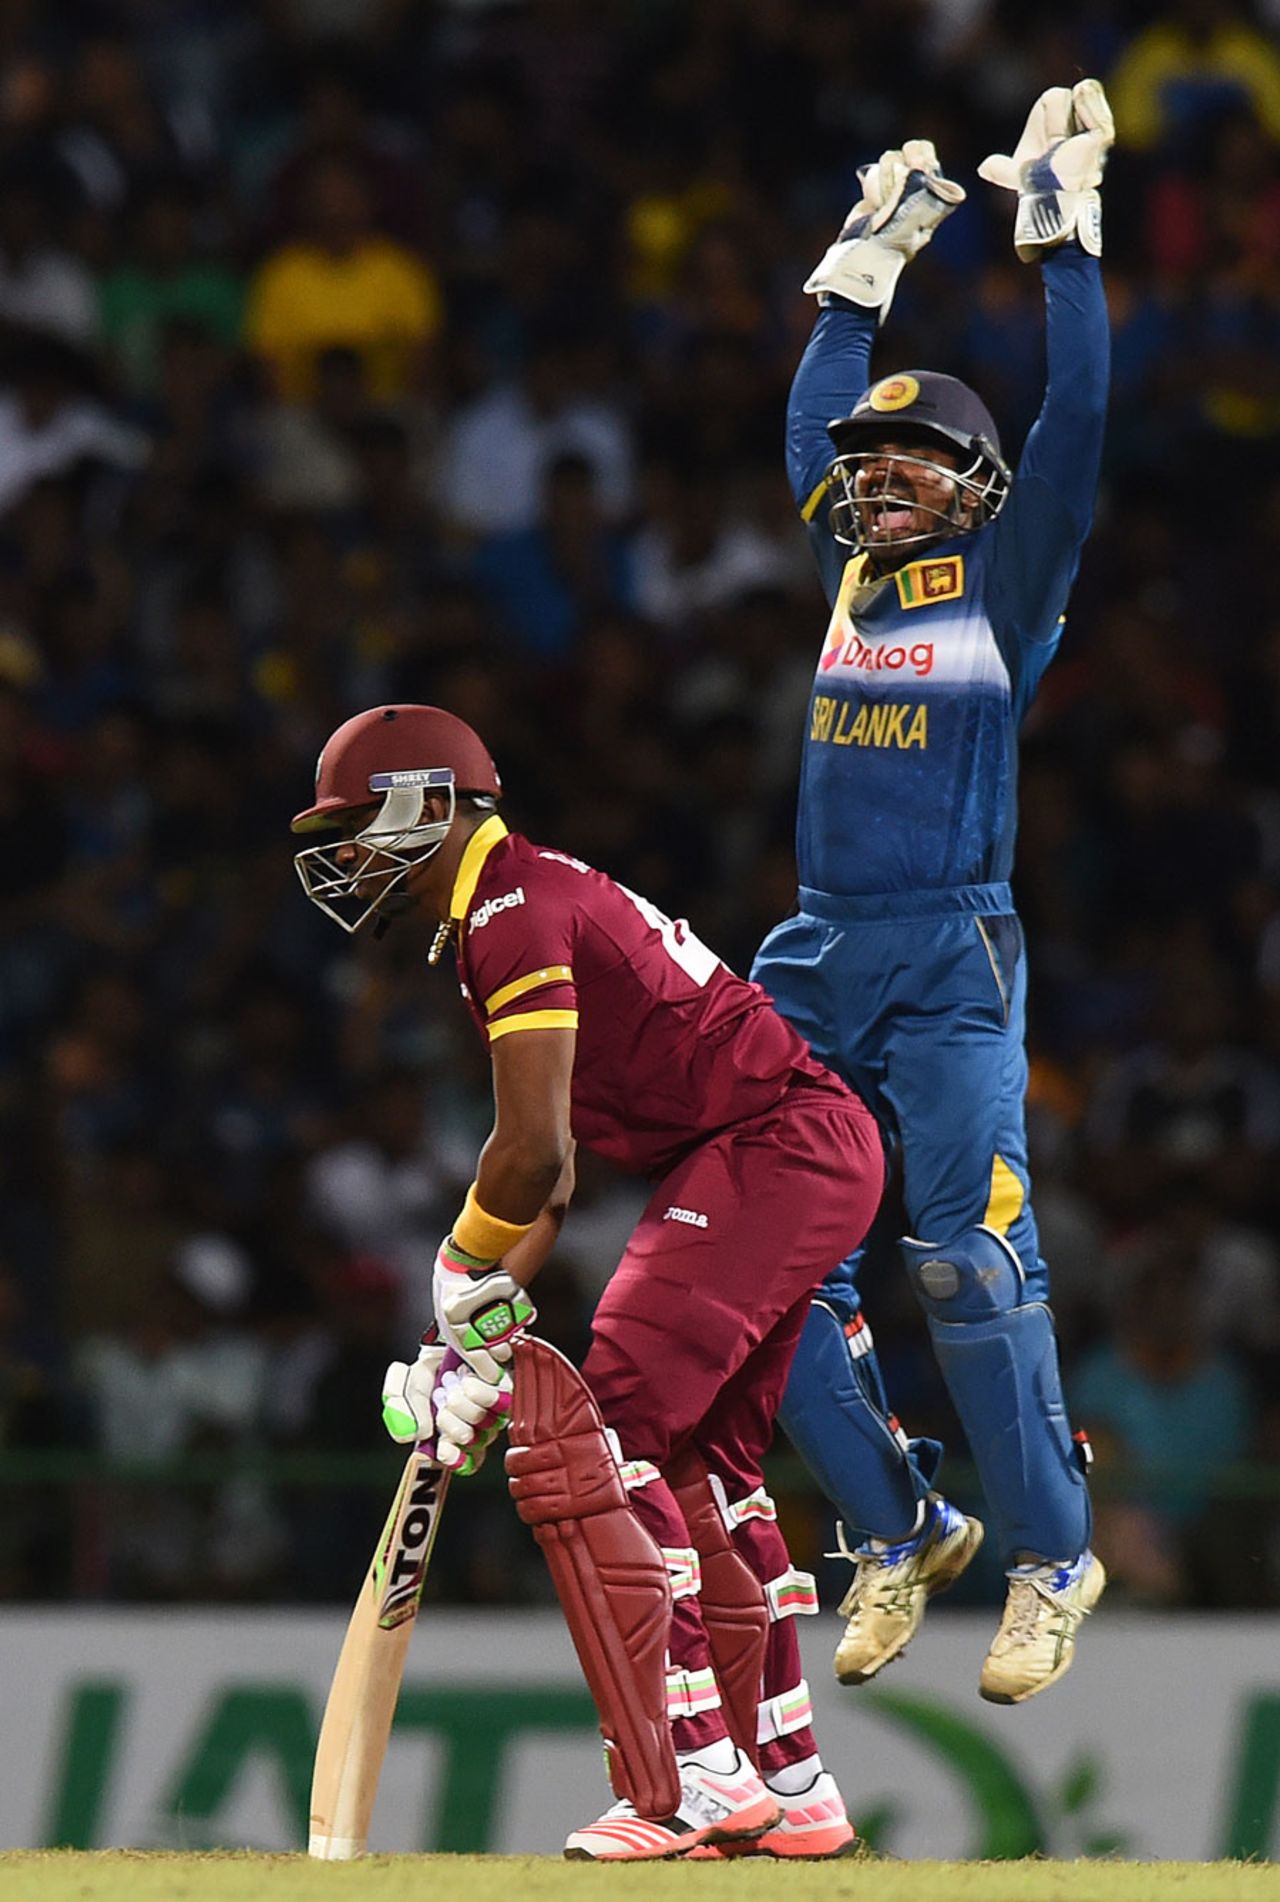 Kusal Perera took a sharp catch to remove Dwayne Bravo, Sri Lanka v West Indies, 1st T20, Pallekele, November 9, 2015